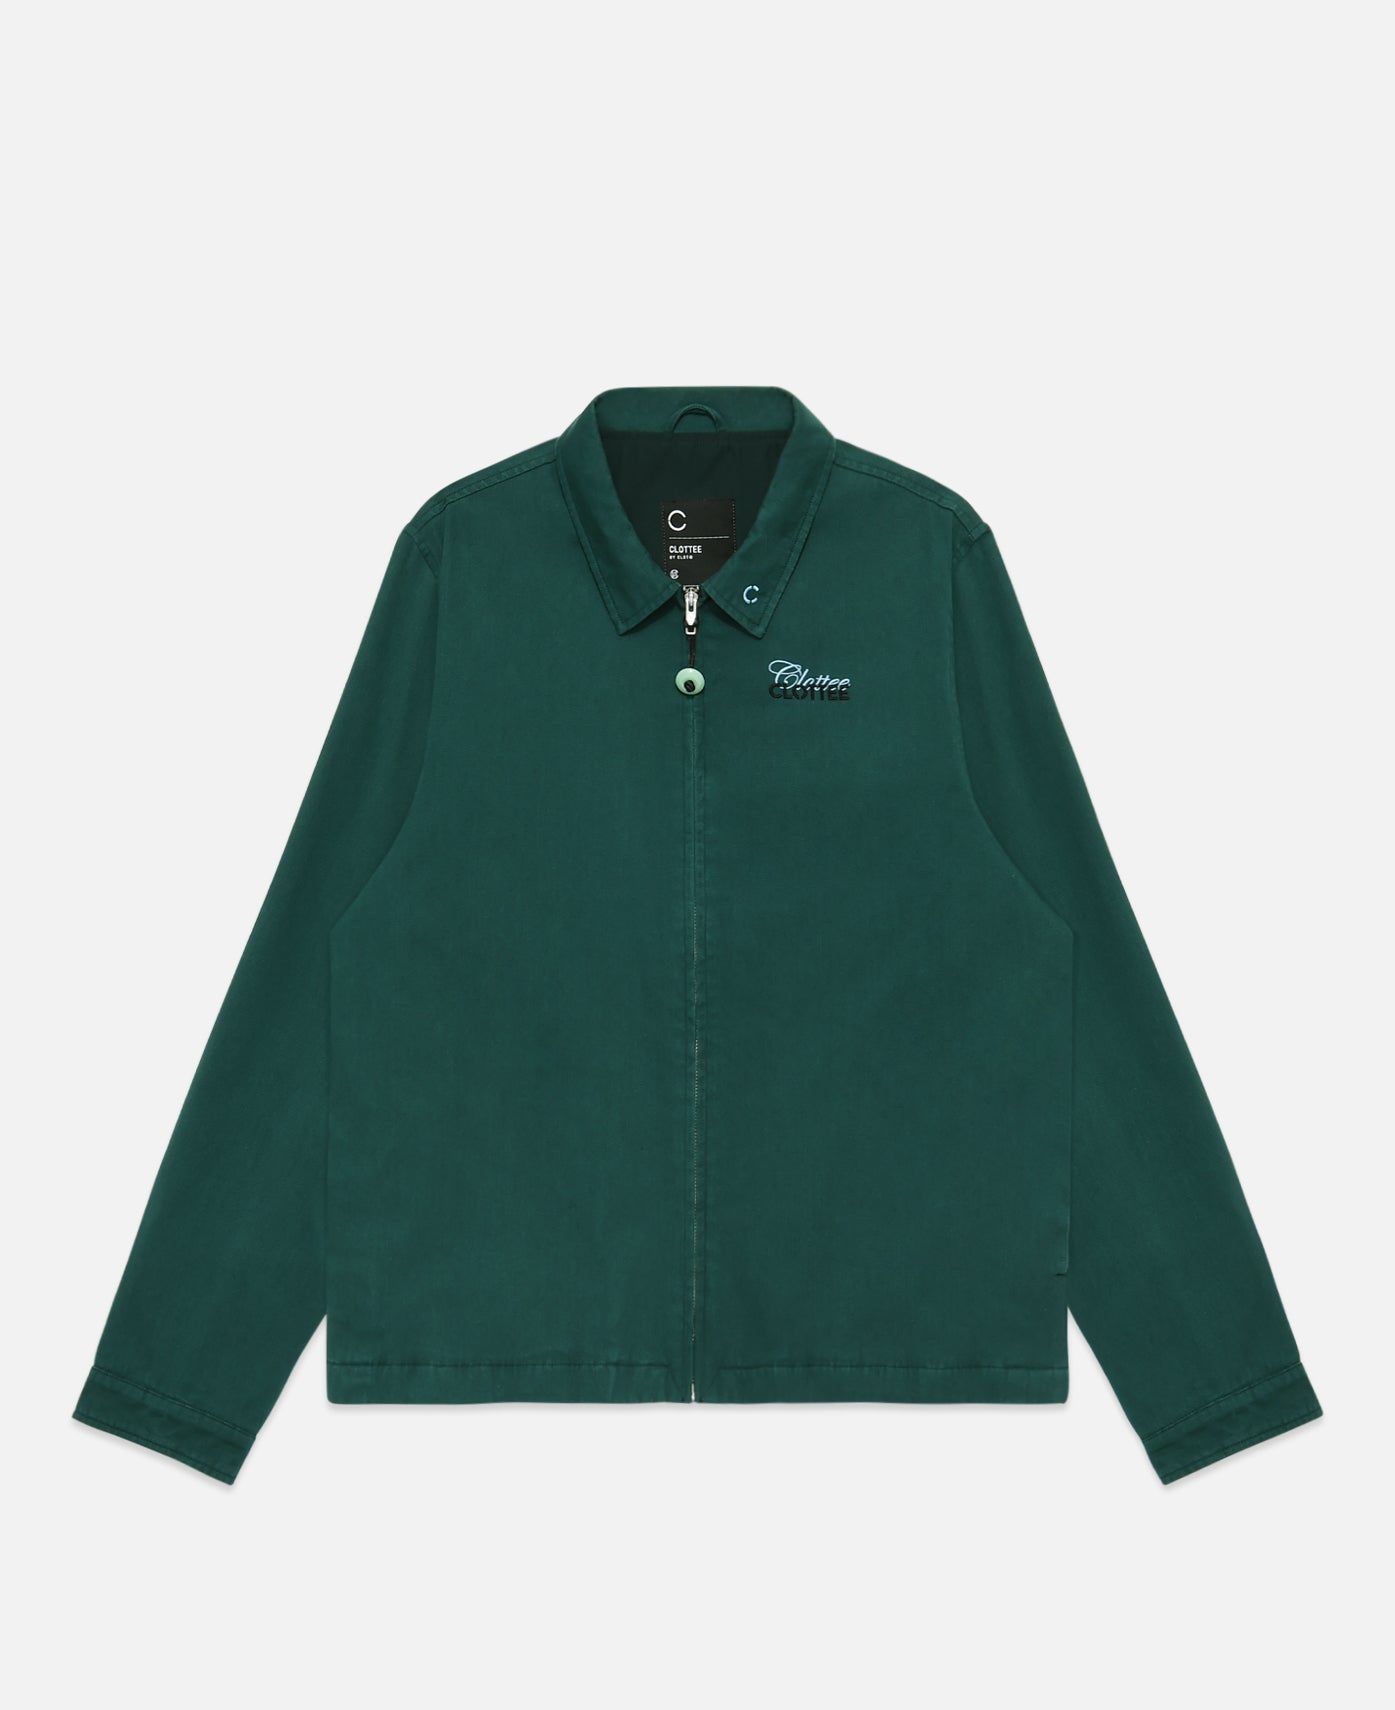 Newport Jacket (Green)